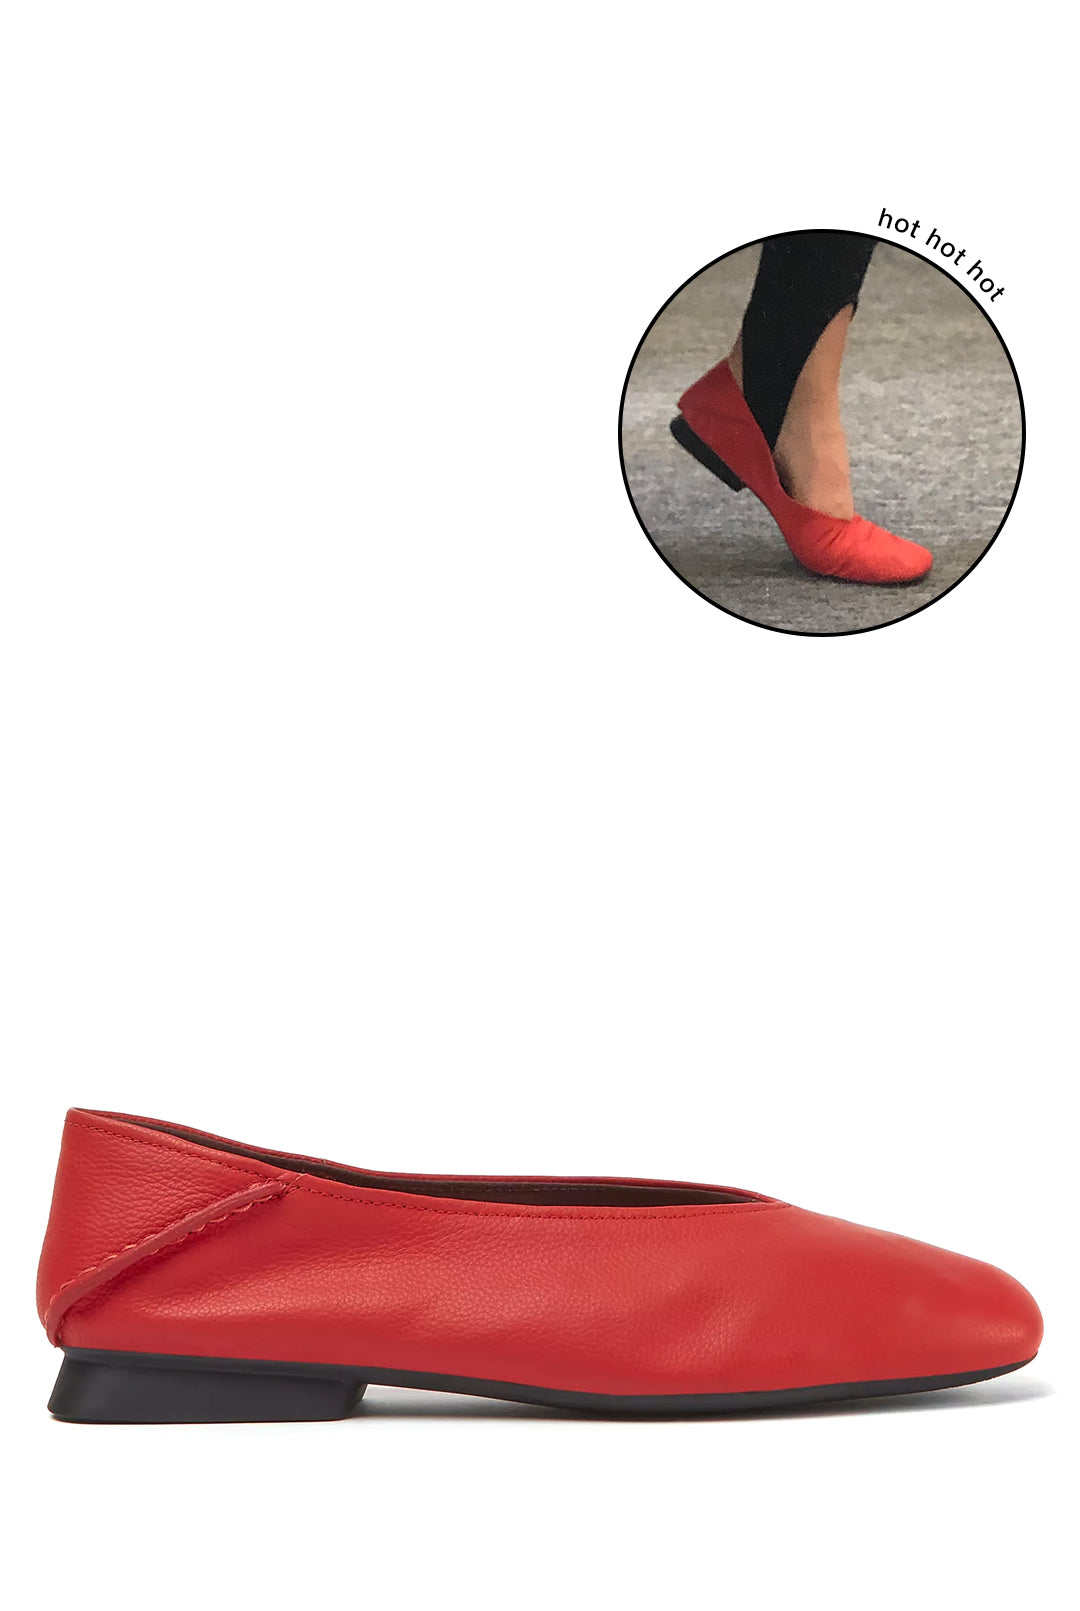 Camper Myra Ballet Shoes, Red